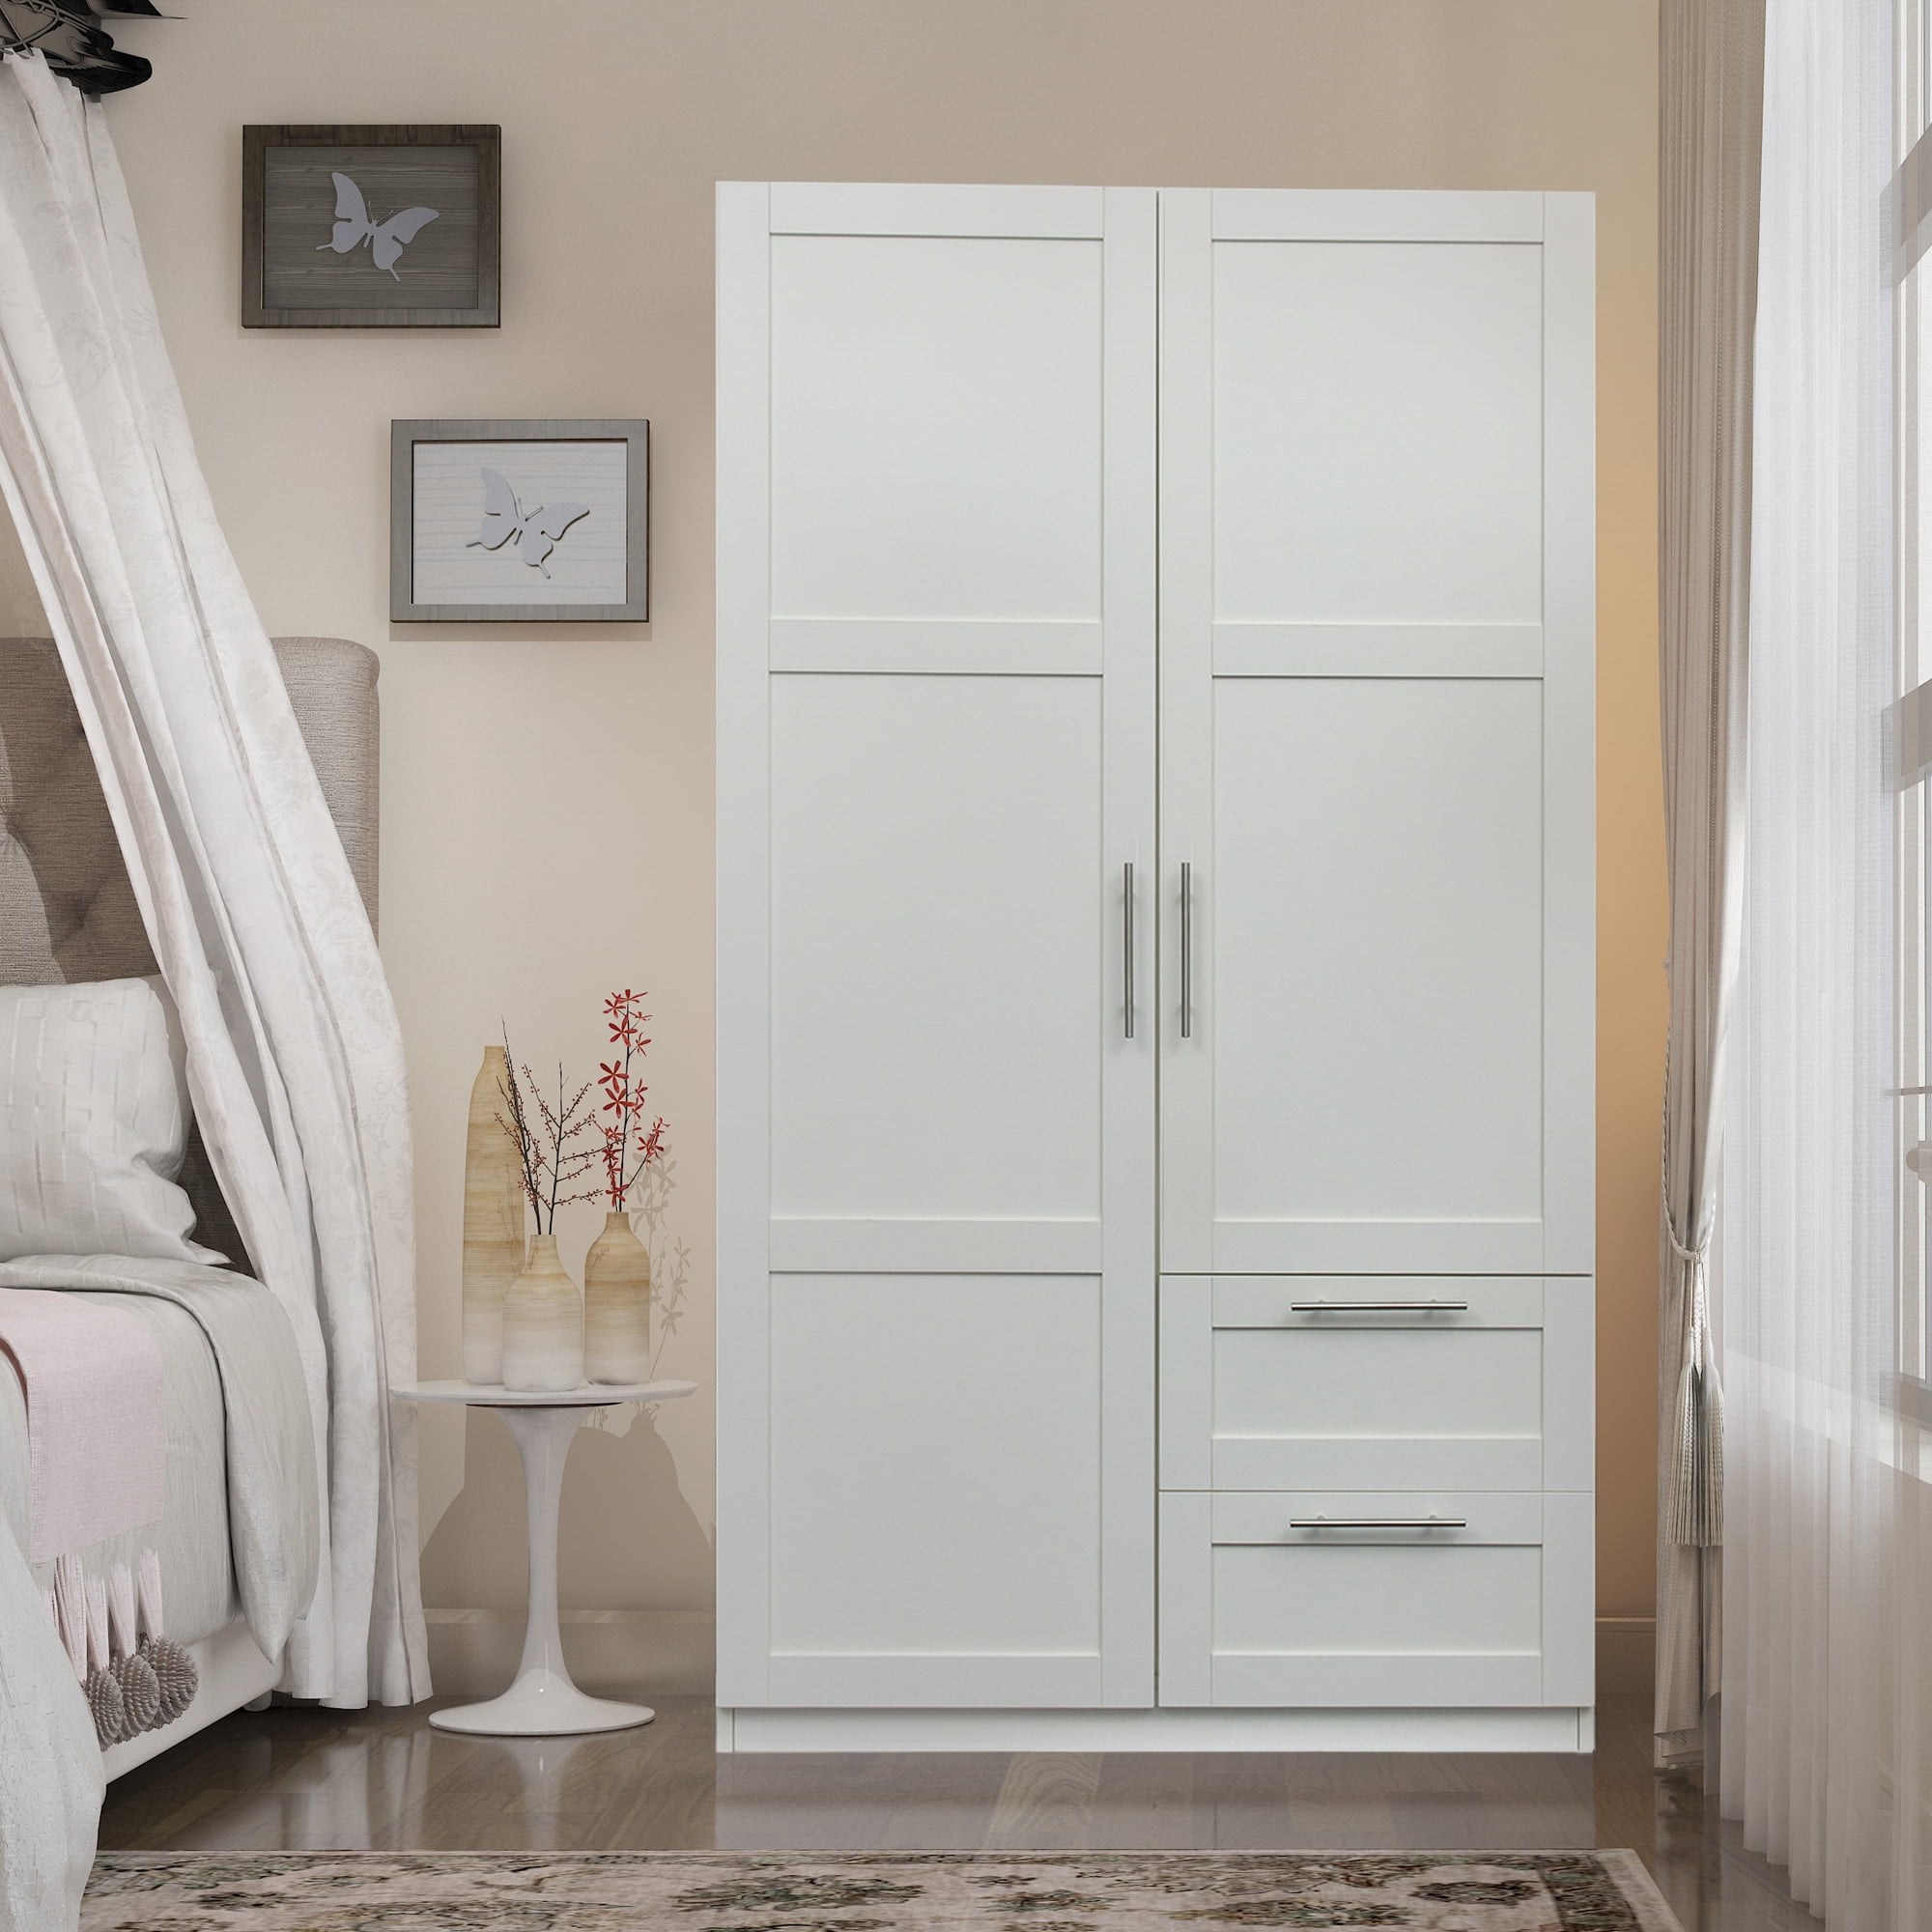 Tall White Wardrobe Armoire - Wooden Storage Cabinet- CharmyDecor